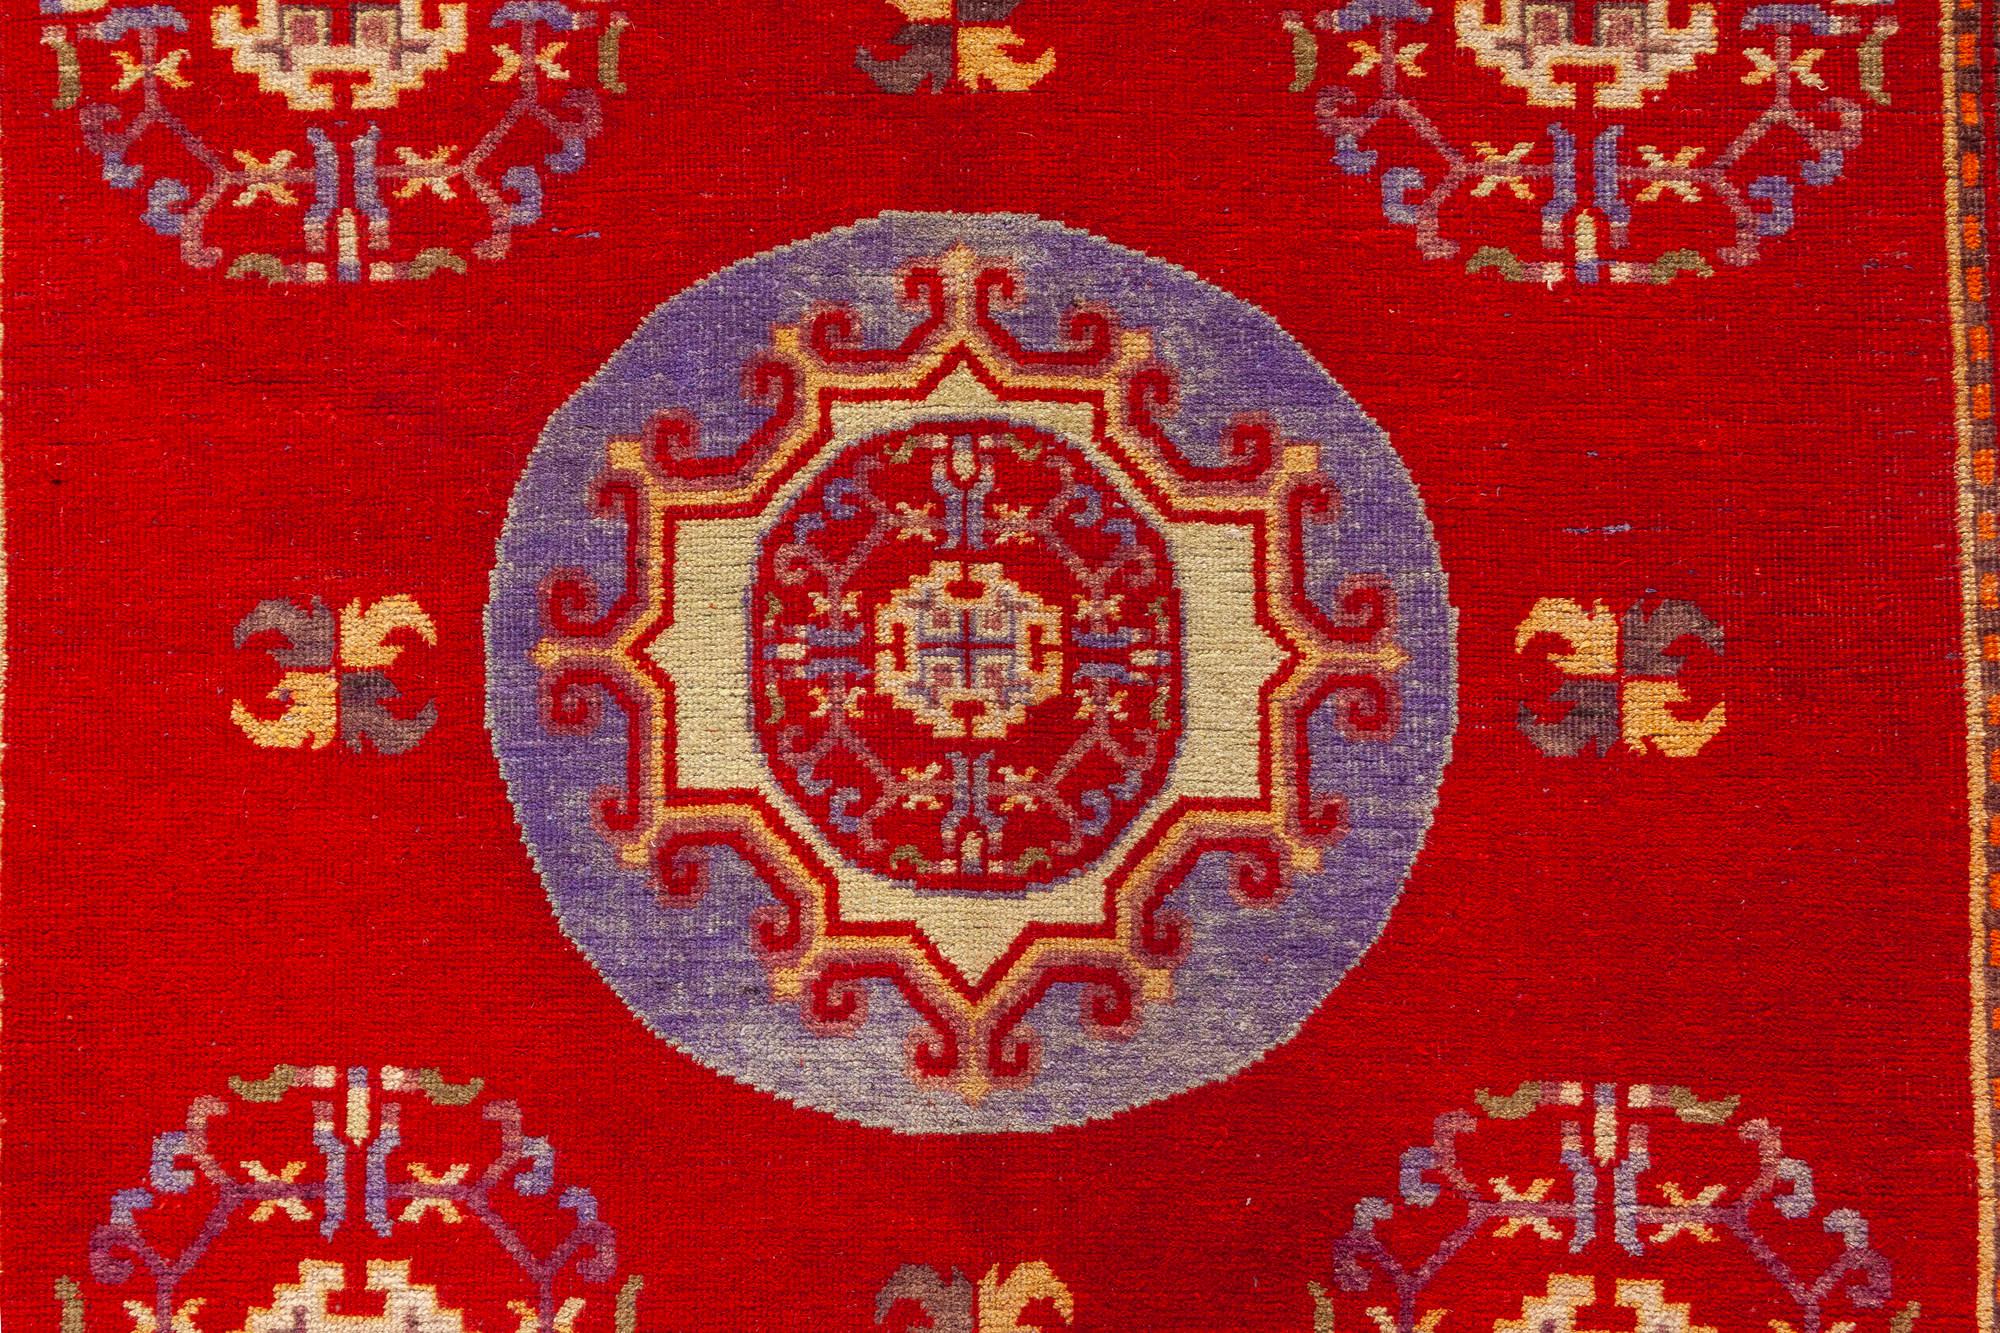 Mid-20th century Samarkand red, blue handmade wool rug.
Size: 4'6